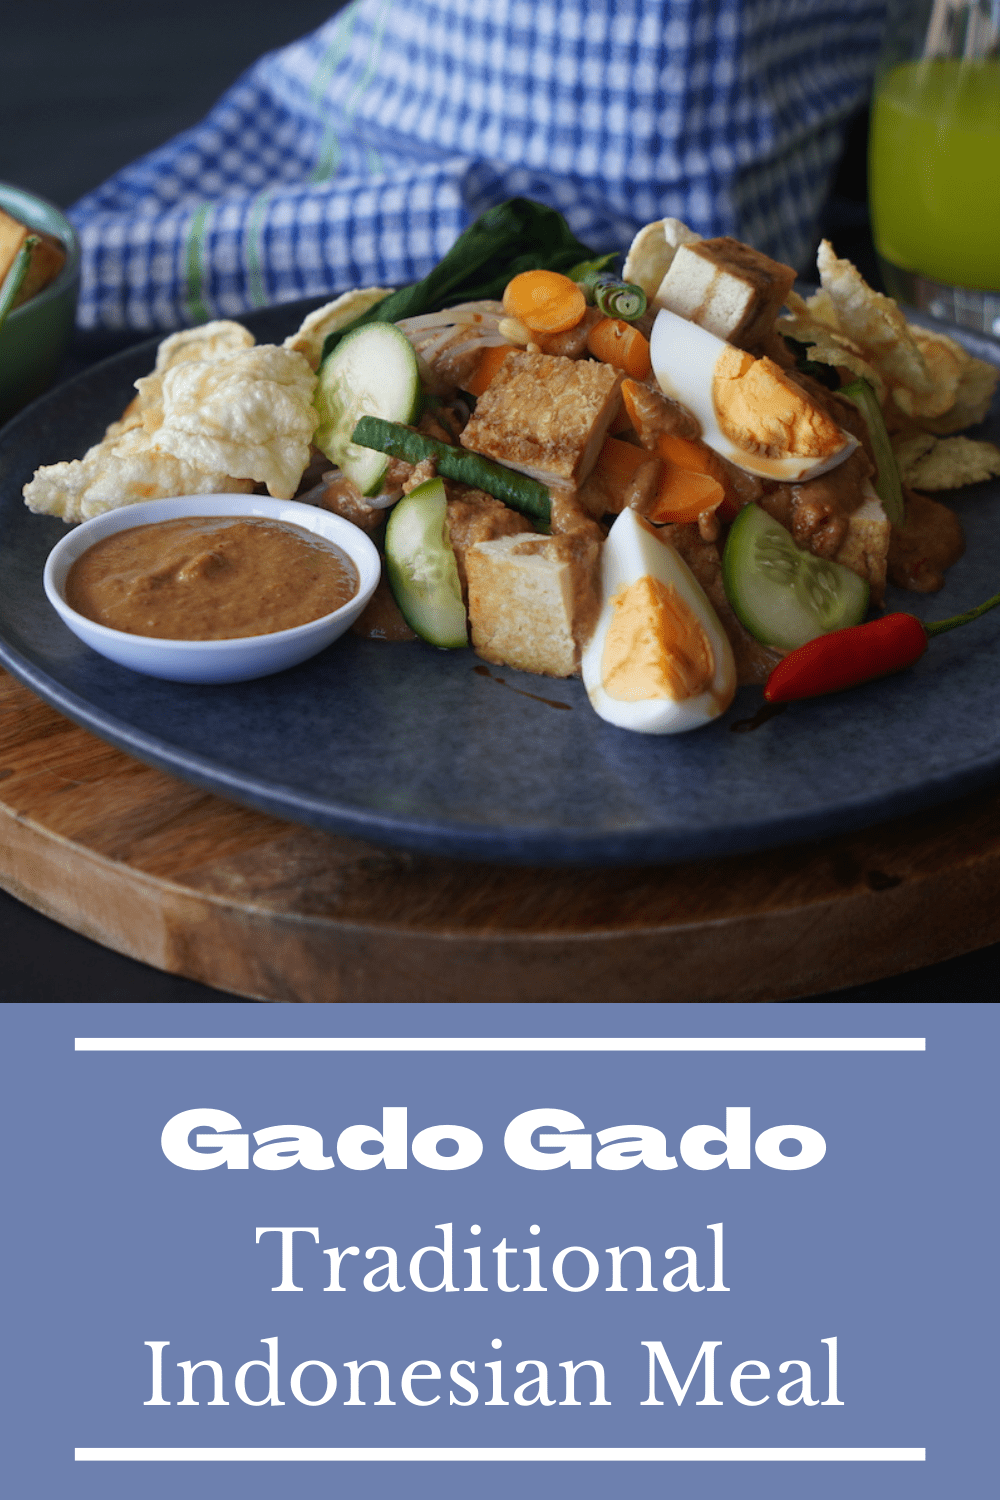 Gado Gado recipe plated and ready to eat.